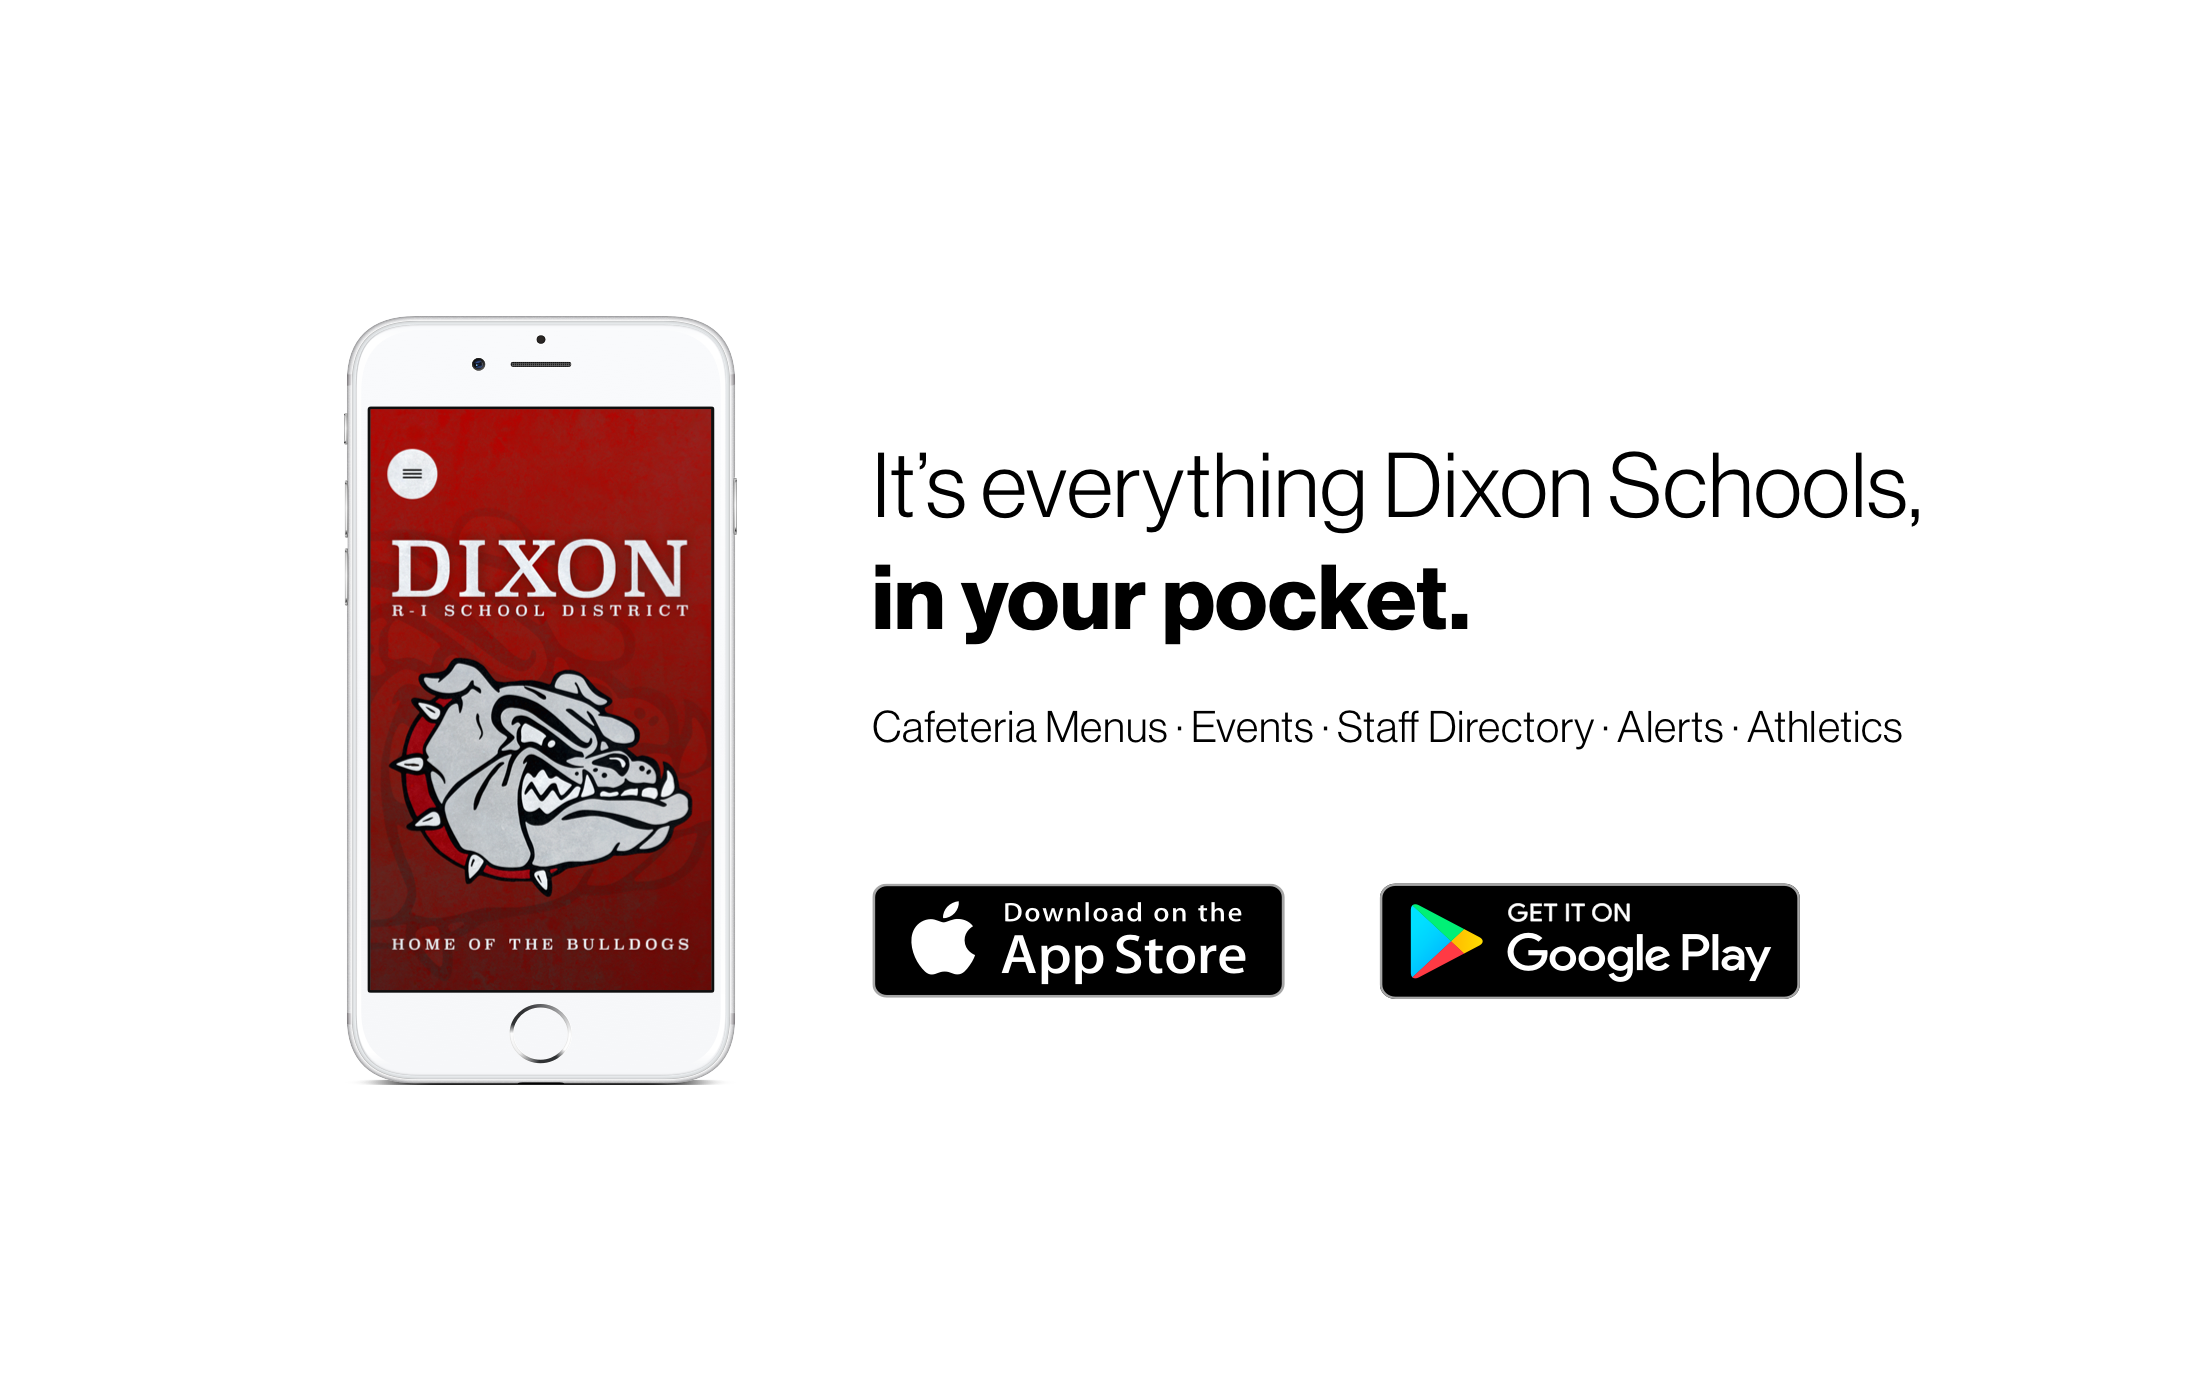 Dixon Schools Mobile App